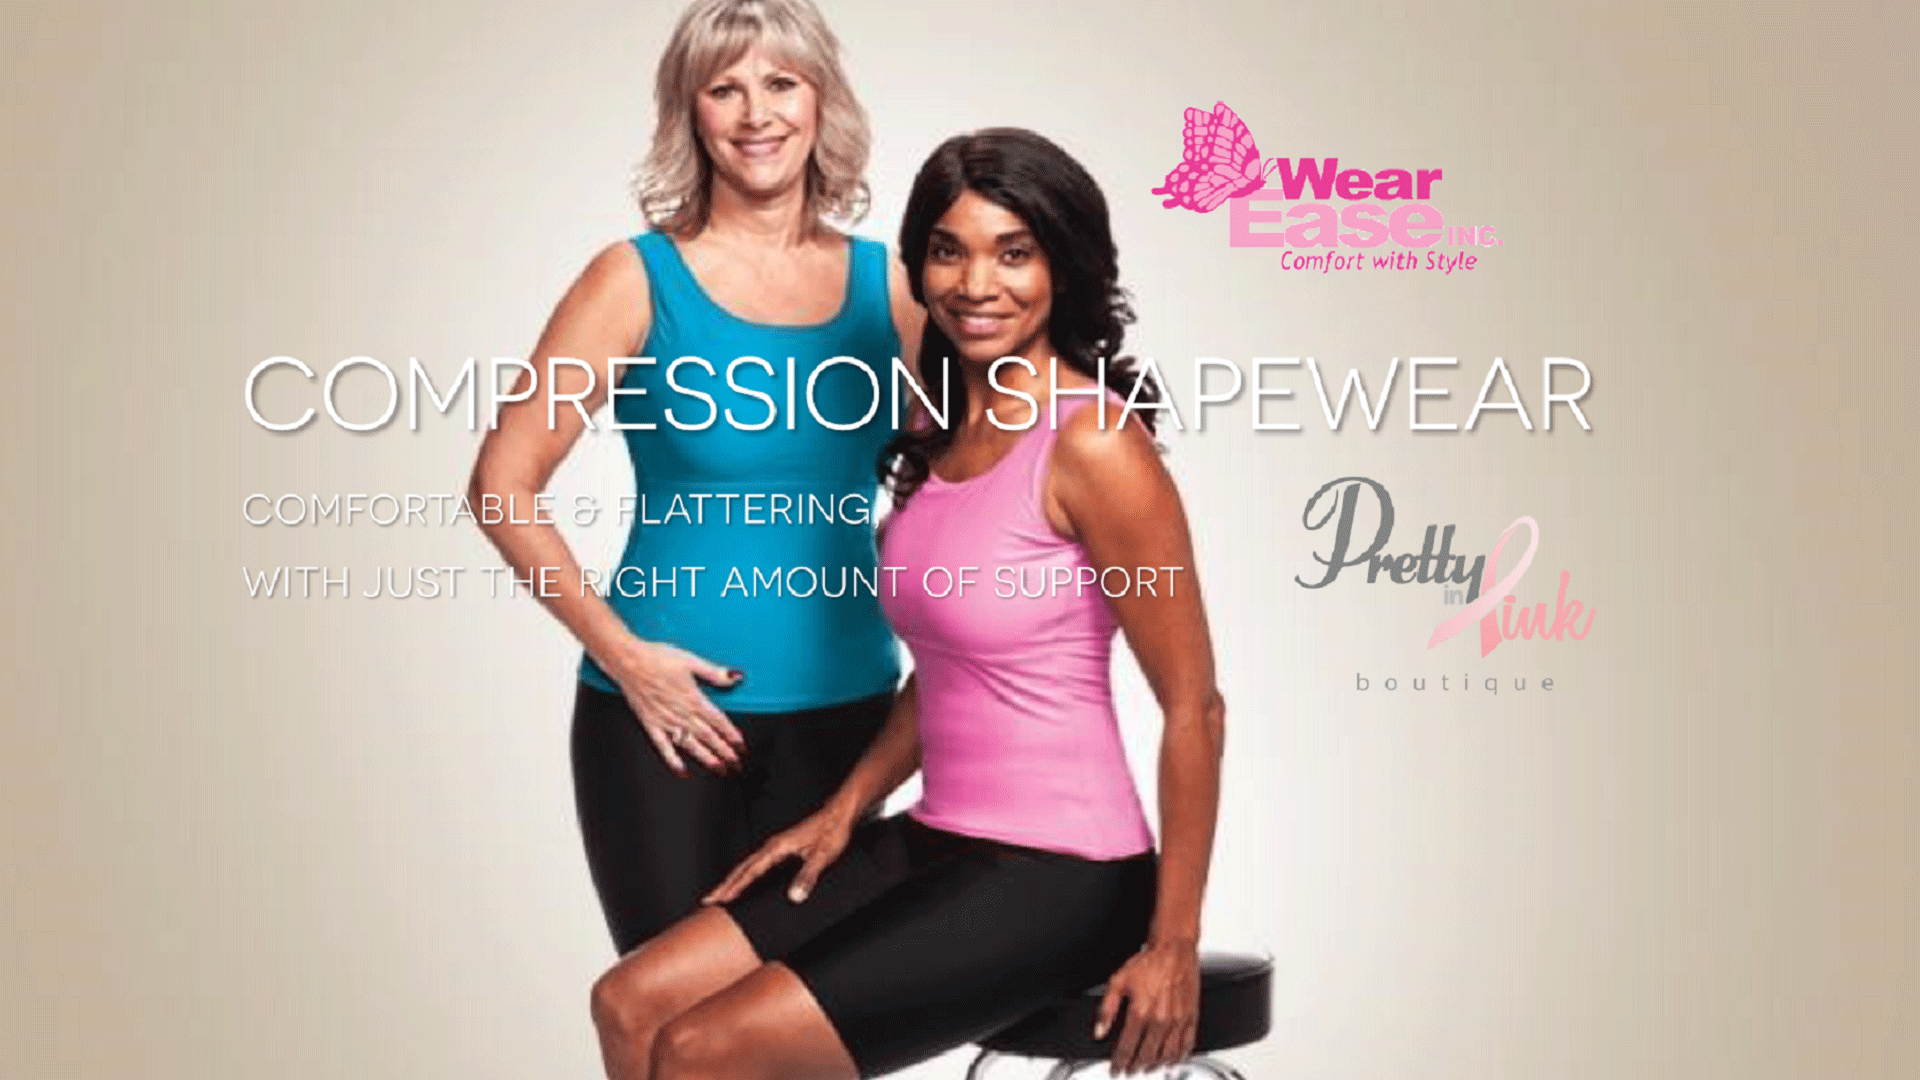 Compression shapewear